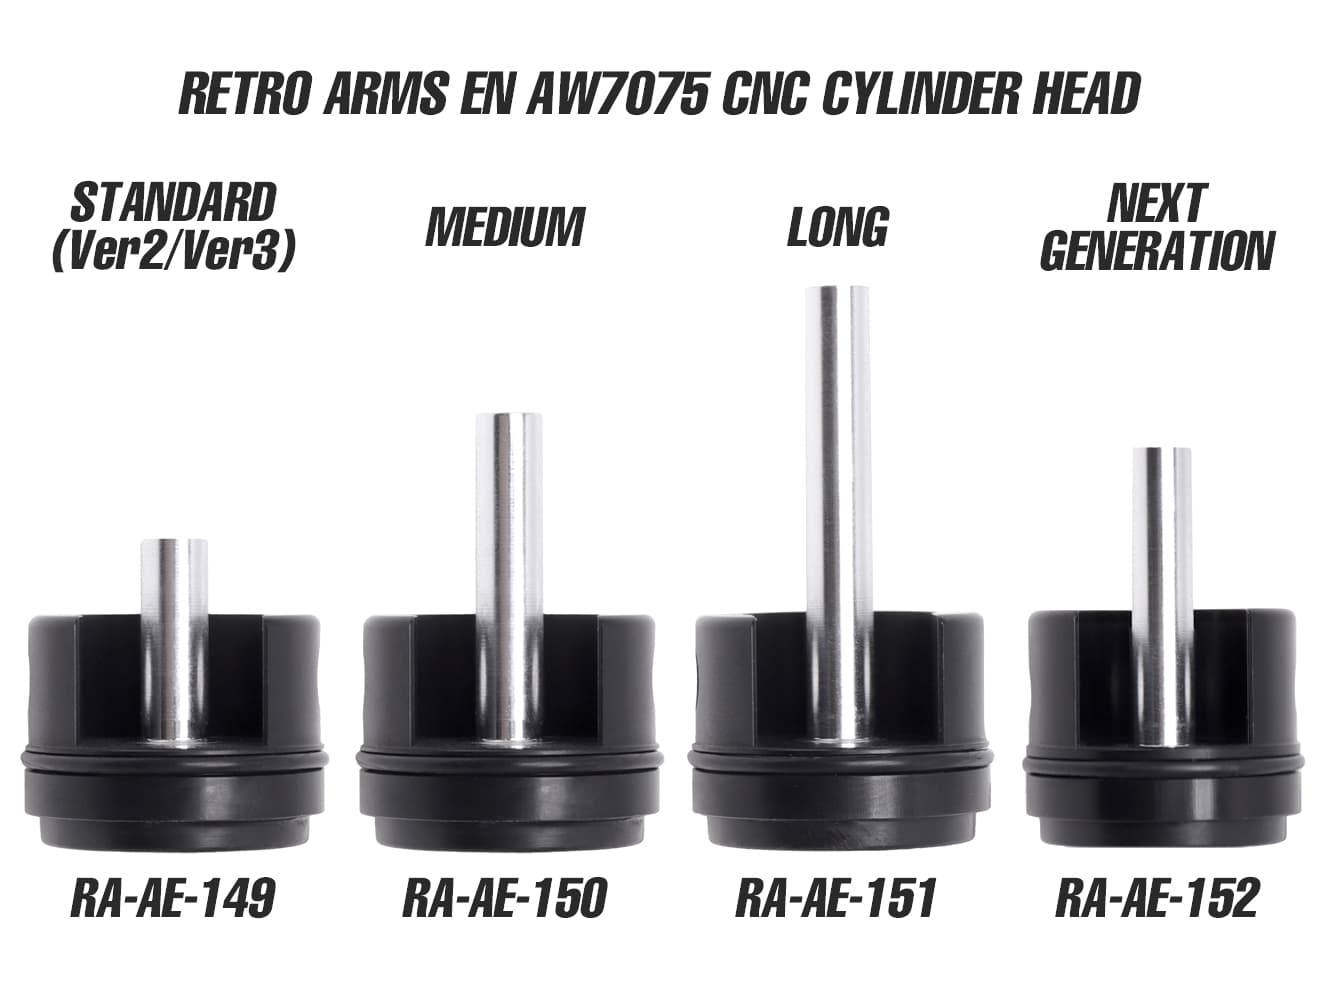 RETRO ARMS EN AW7075 CNC シリンダーヘッド [タイプ：A スタンダード(Ver2/Ver3) / B ミディアム / C ロング / 次世代専用]